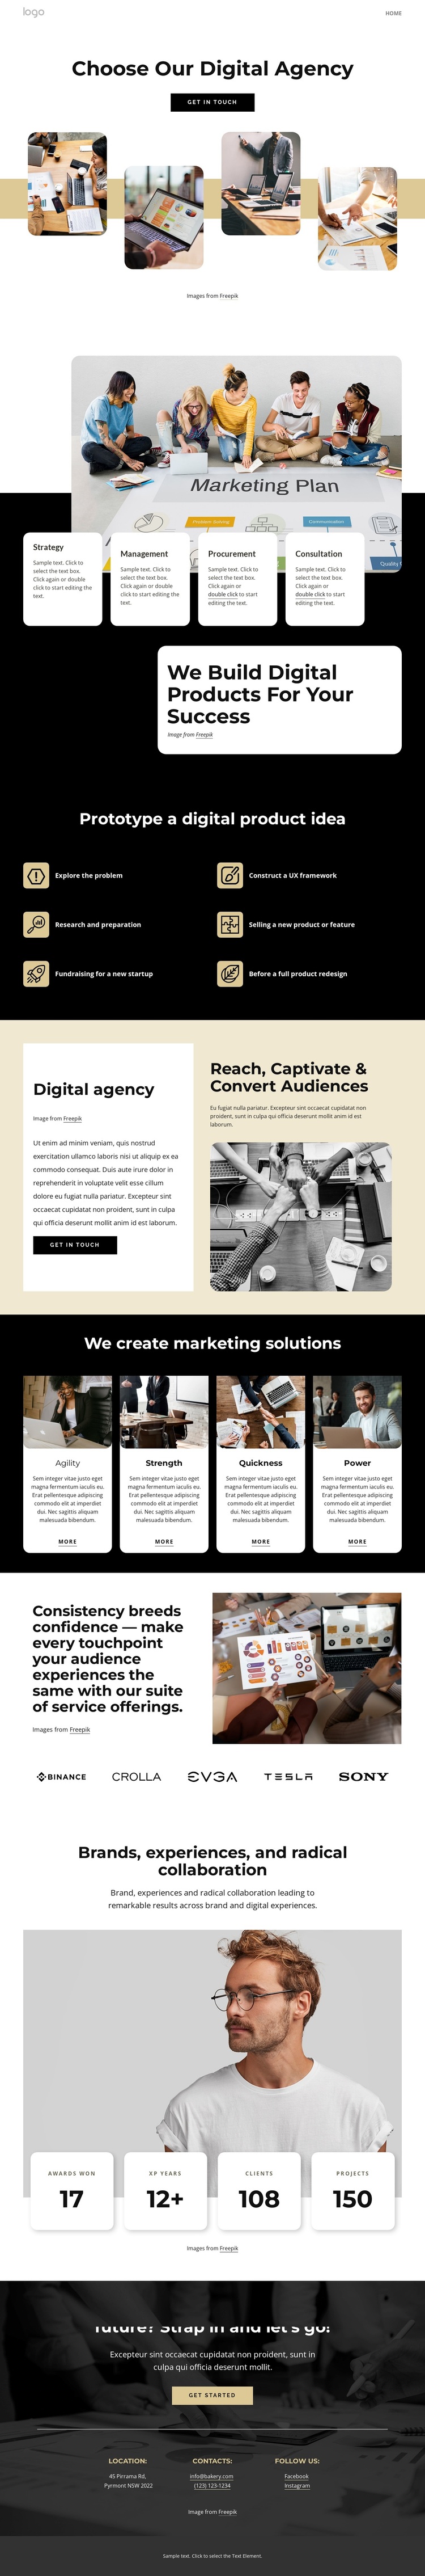 Choose our digital agency Template